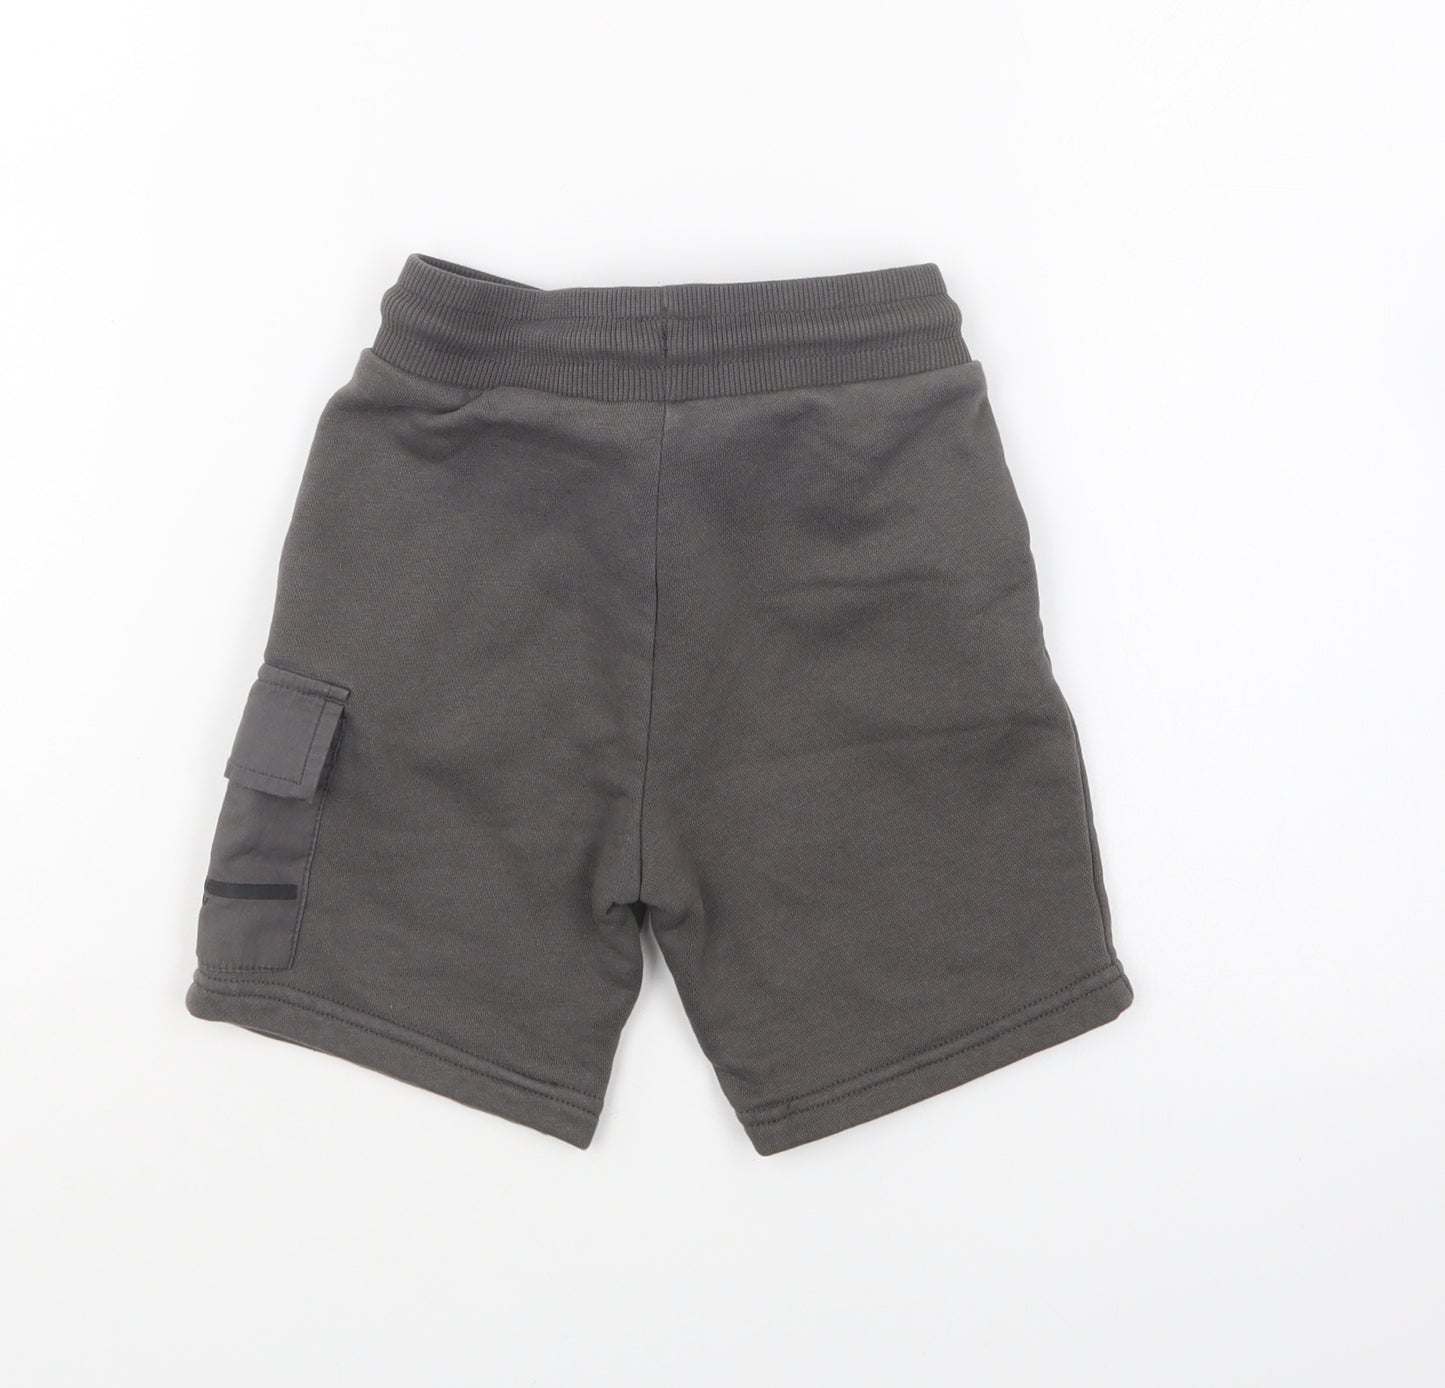 George Boys Grey Cotton Cargo Shorts Size 5-6 Years Regular Drawstring